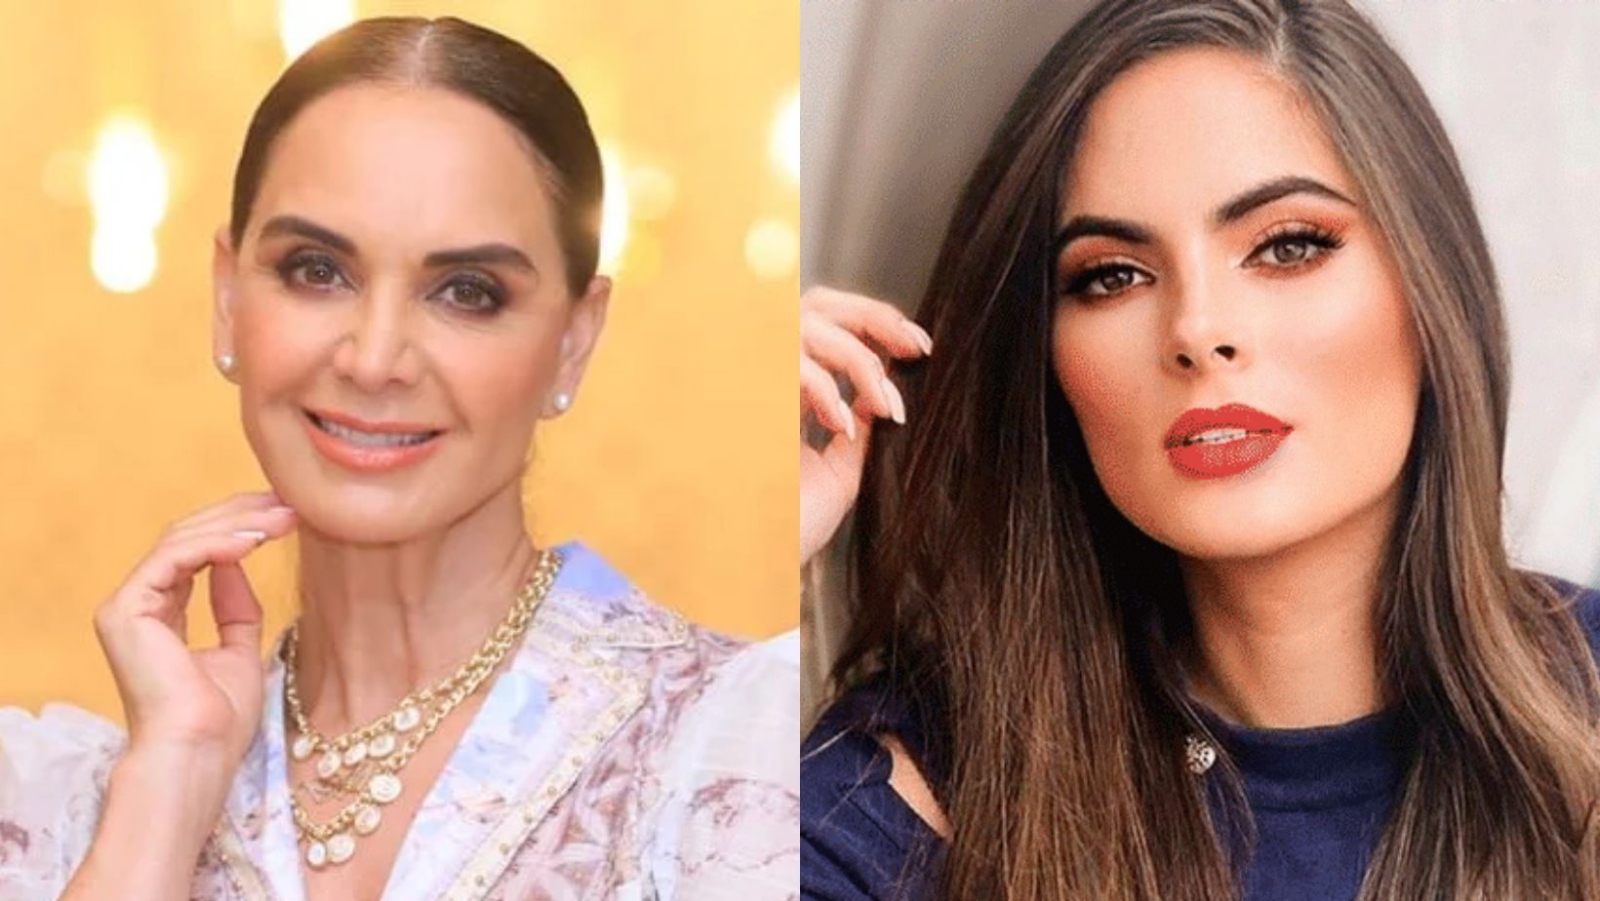 Miss México reacciona a salida de Lupita Jones de Mexicana Universal: "Es karma, todo se paga"